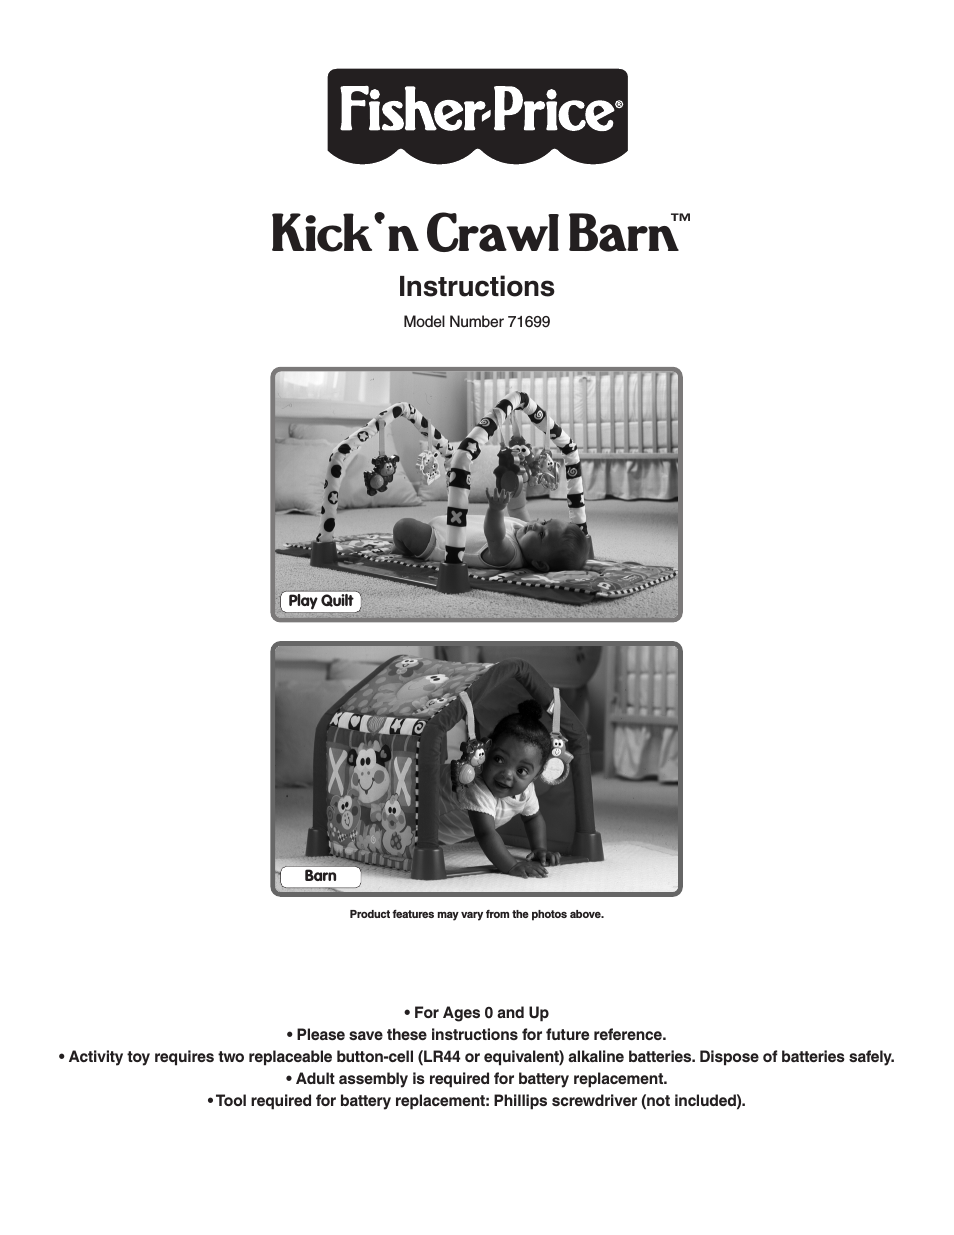 KICK`N CRAWL BARN 71699